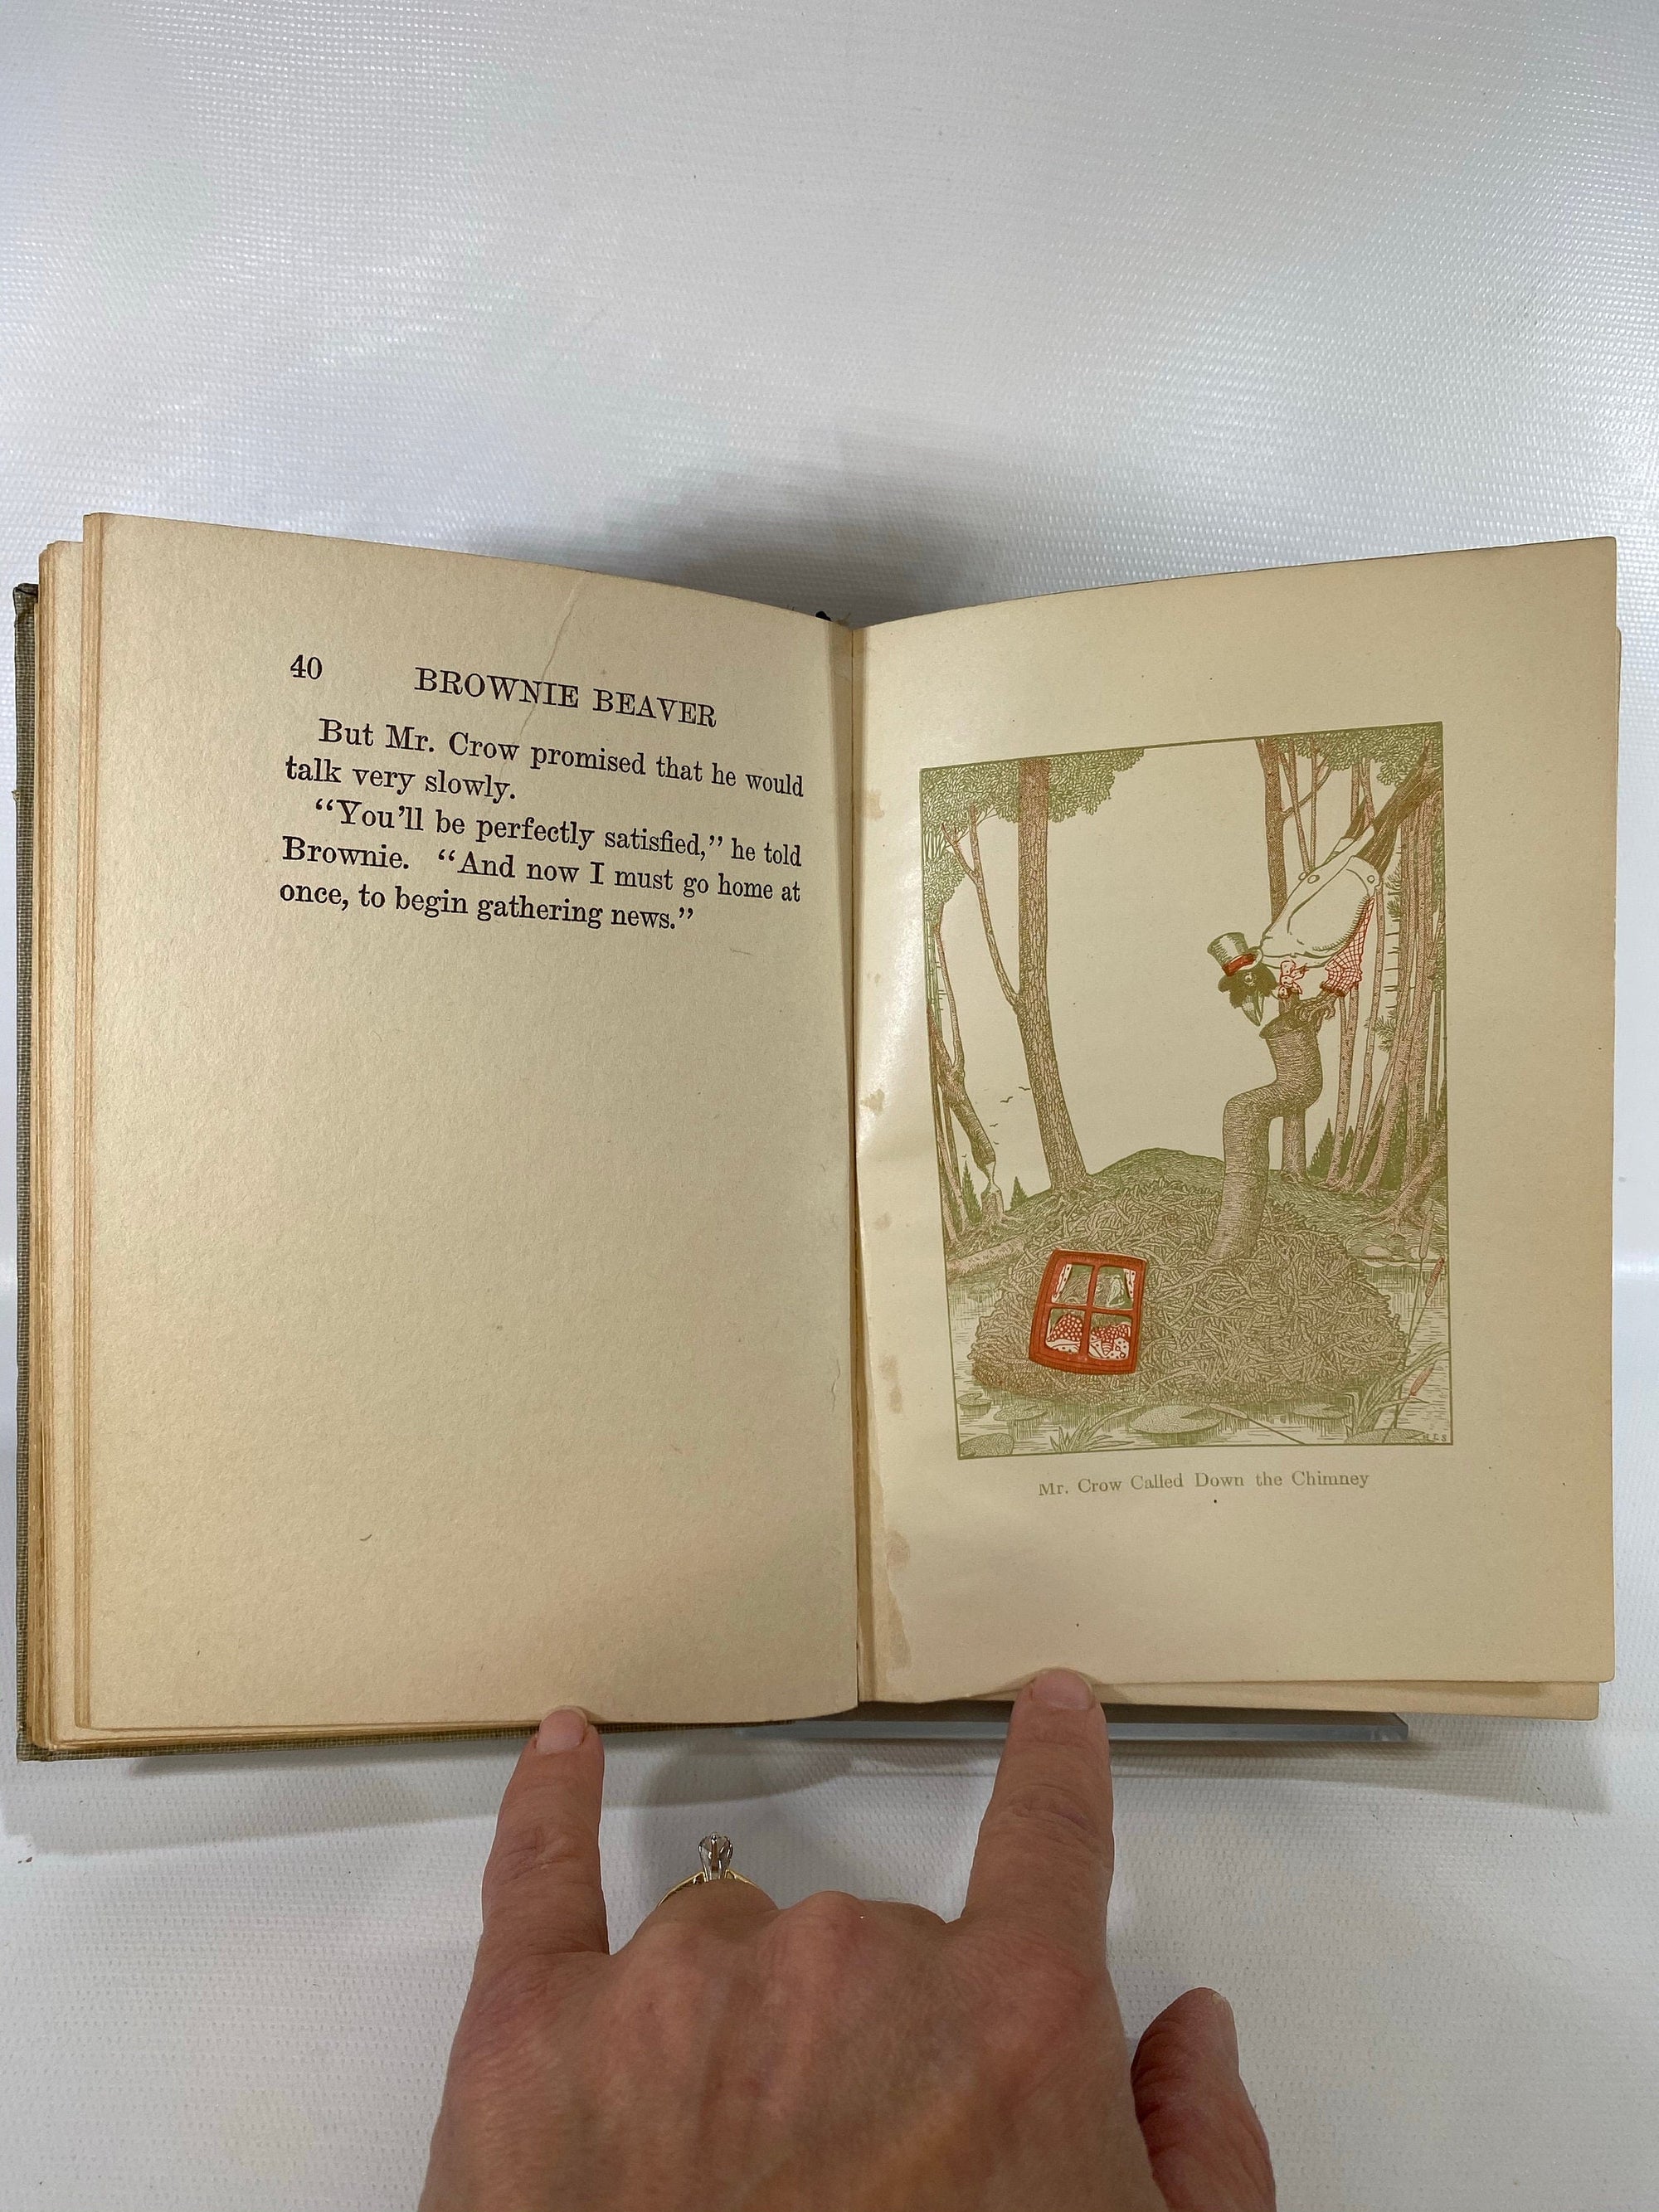 The Tale of Brownie Beaver by Arthur Scott Bailey 1916 Sleepy Time Tales Grosset & DunlapVintage Book